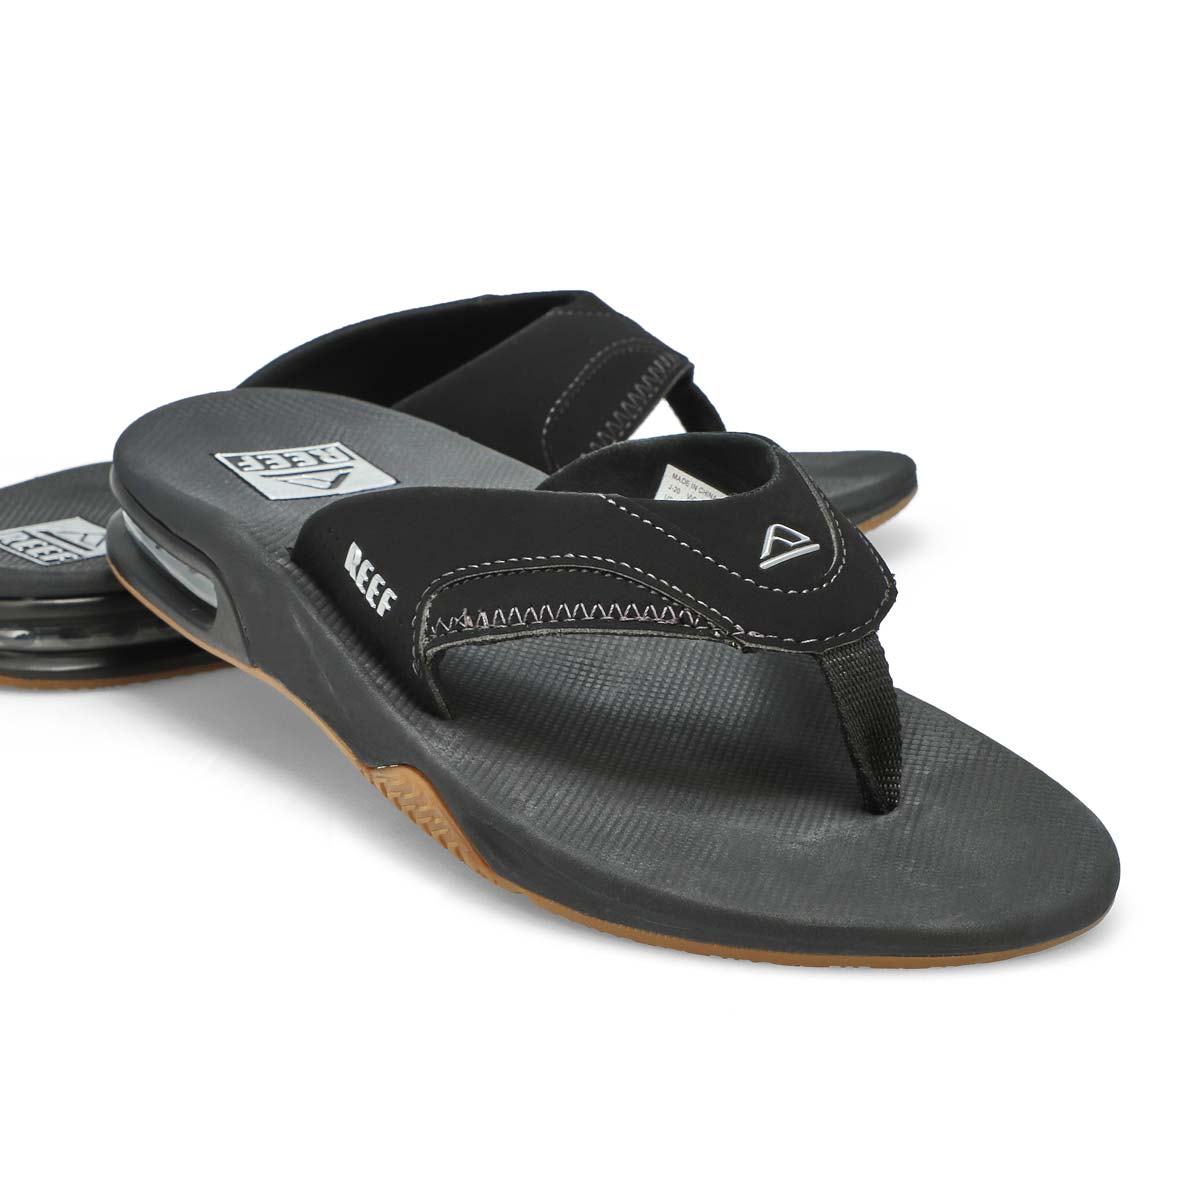 Men's Fanning Thong Sandal - Black/Silver